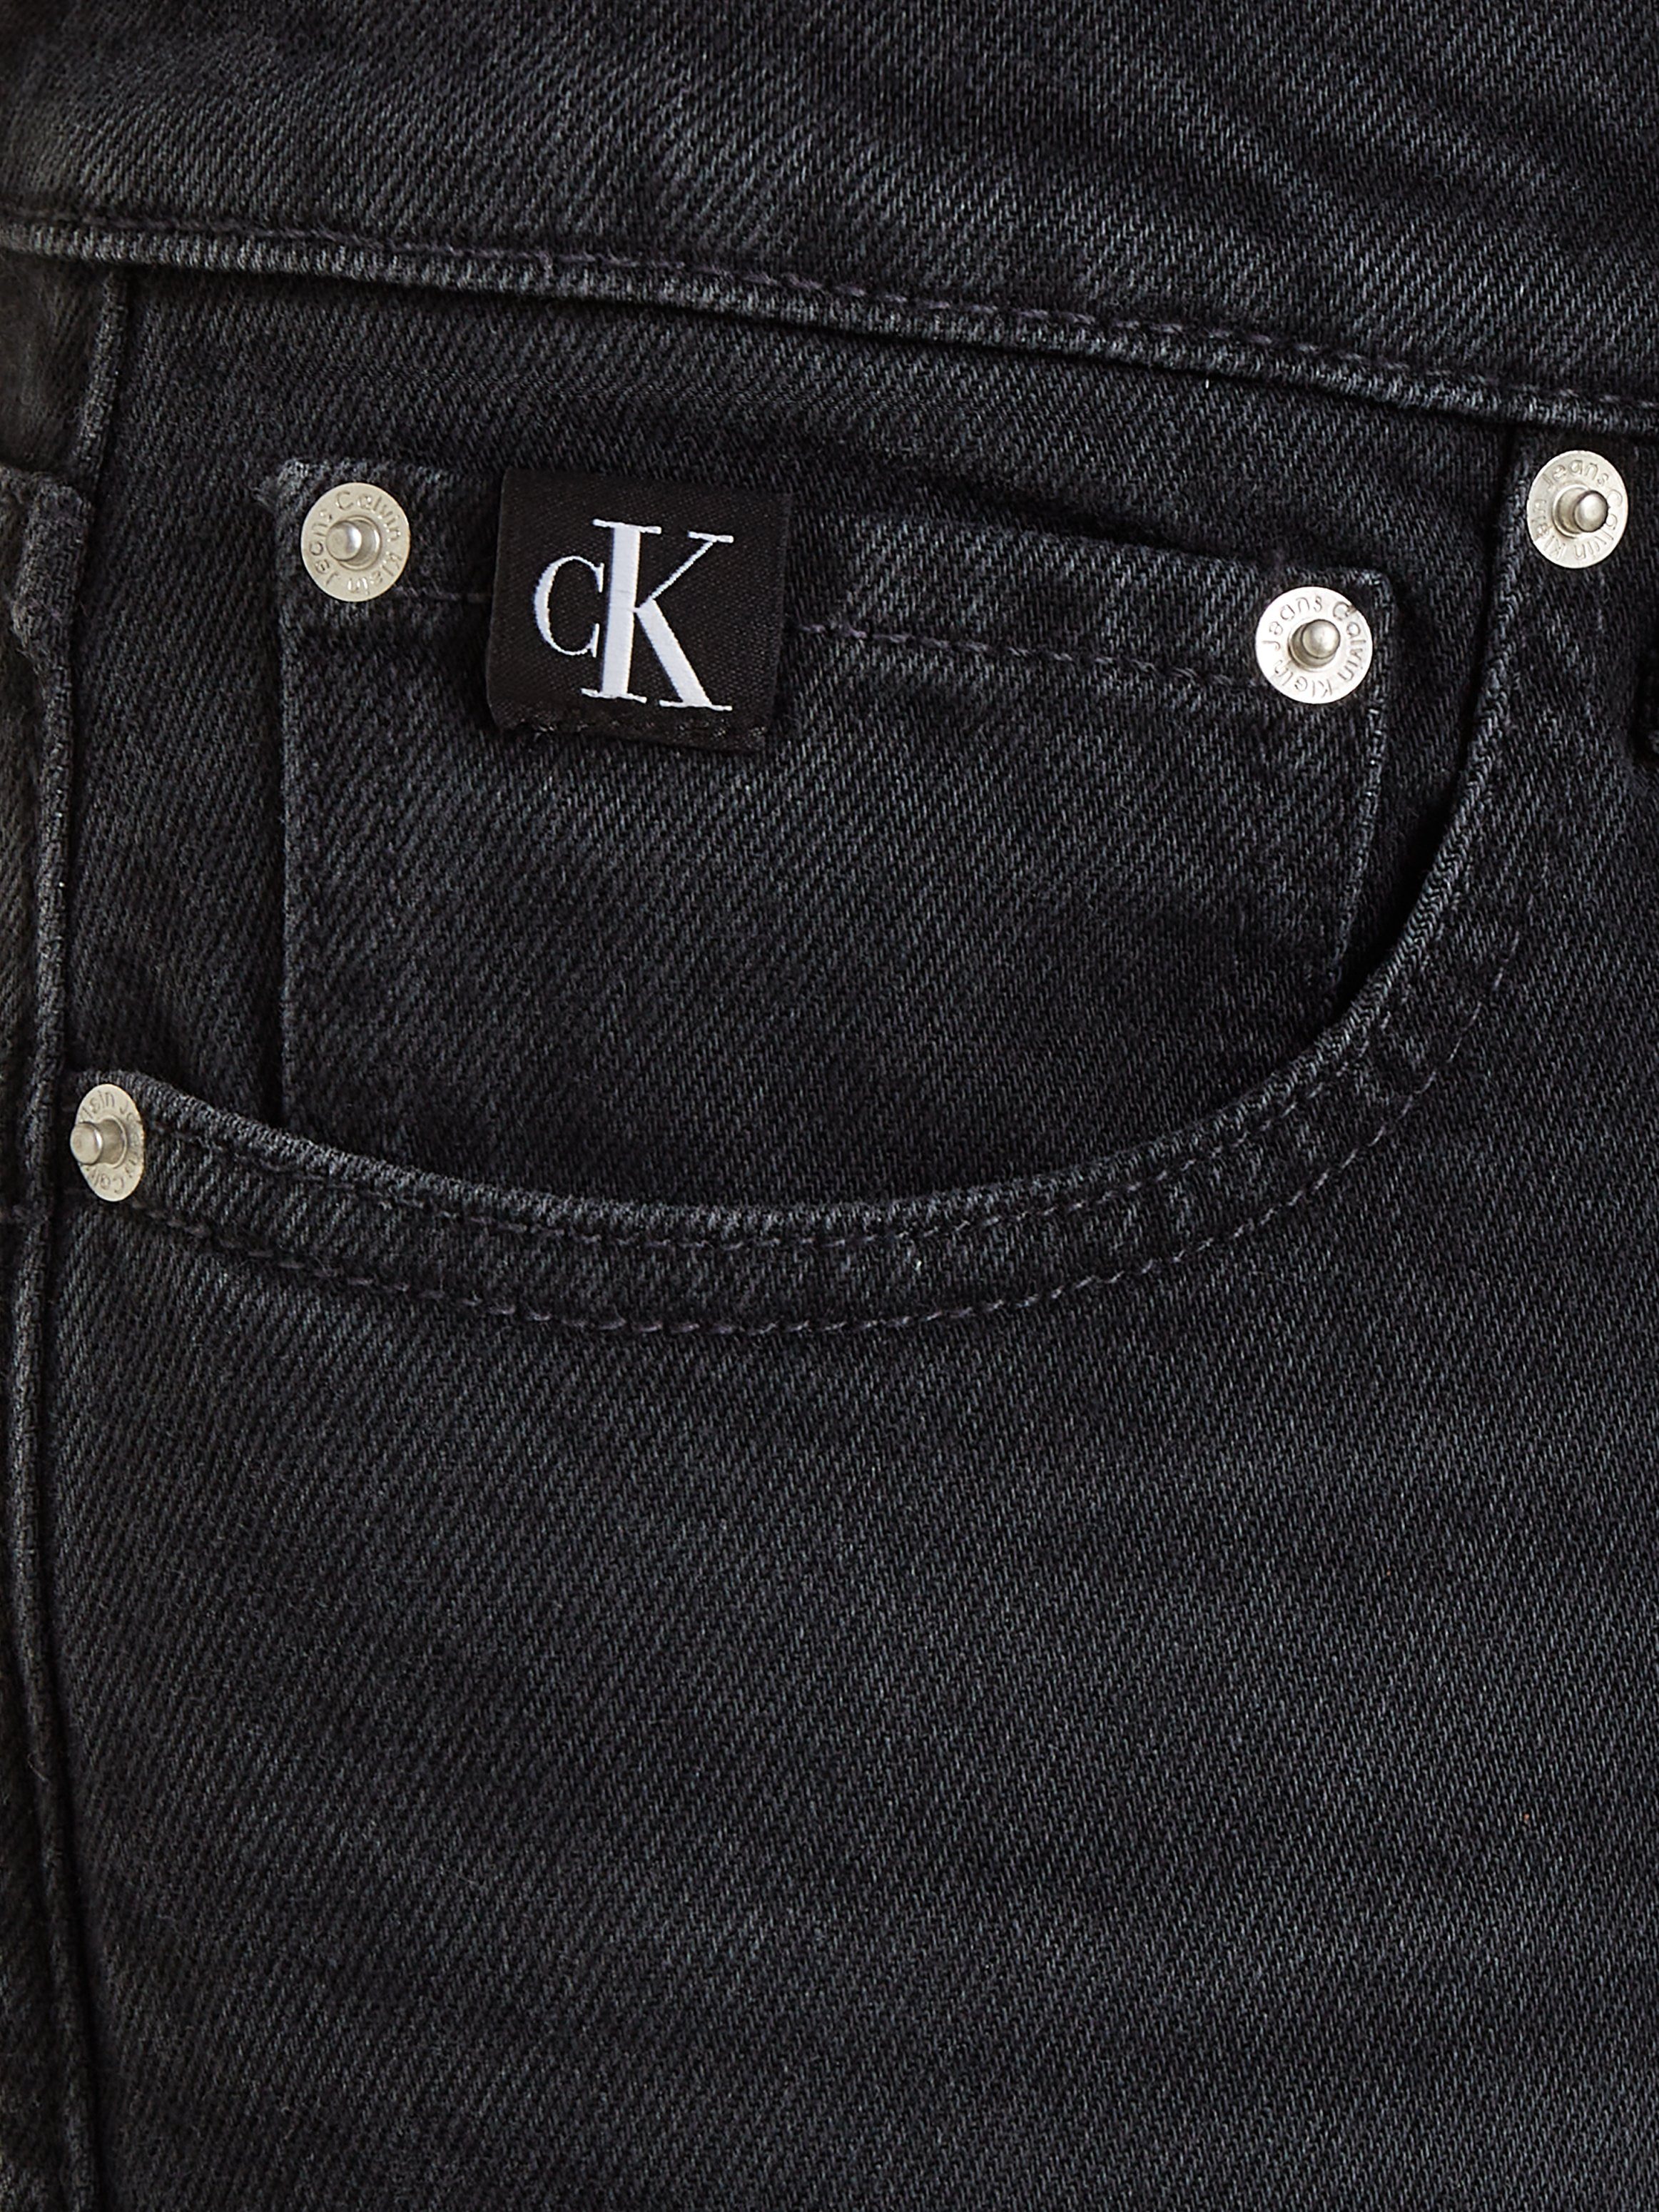 Calvin Klein Slim fit jeans SLIM